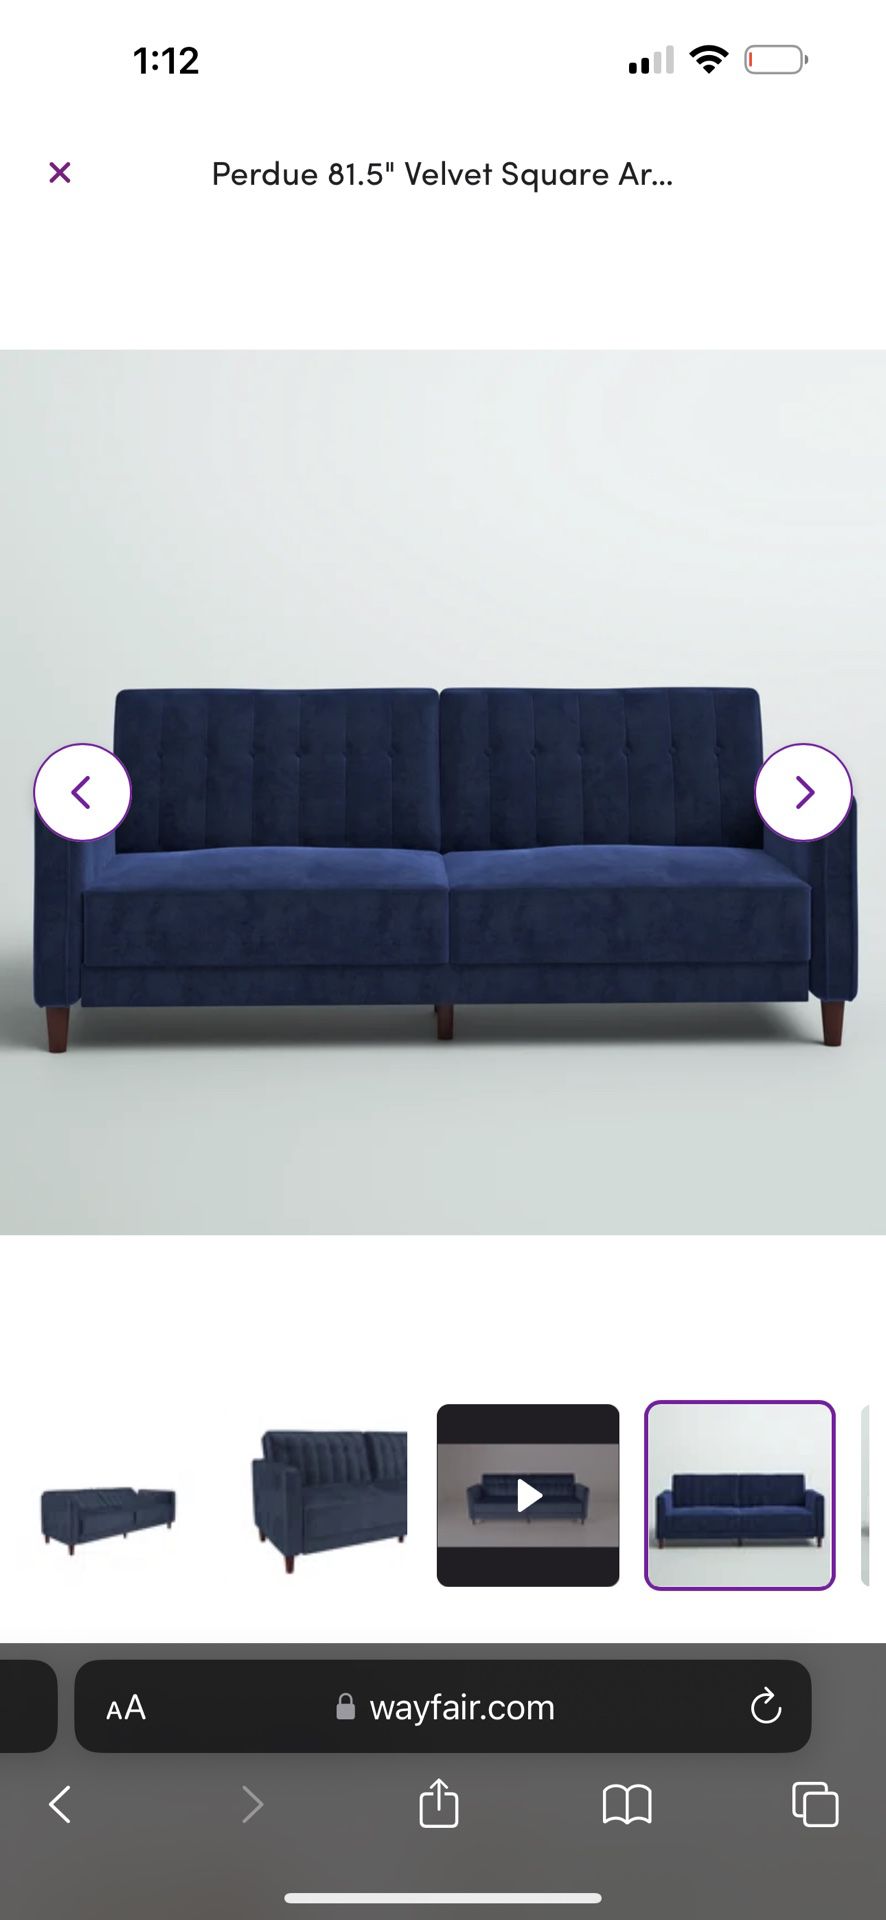 Futon Sofa Velvet With Blue Tint (Perdue 81.5" Velvet Square Arm Convertible Sofa)